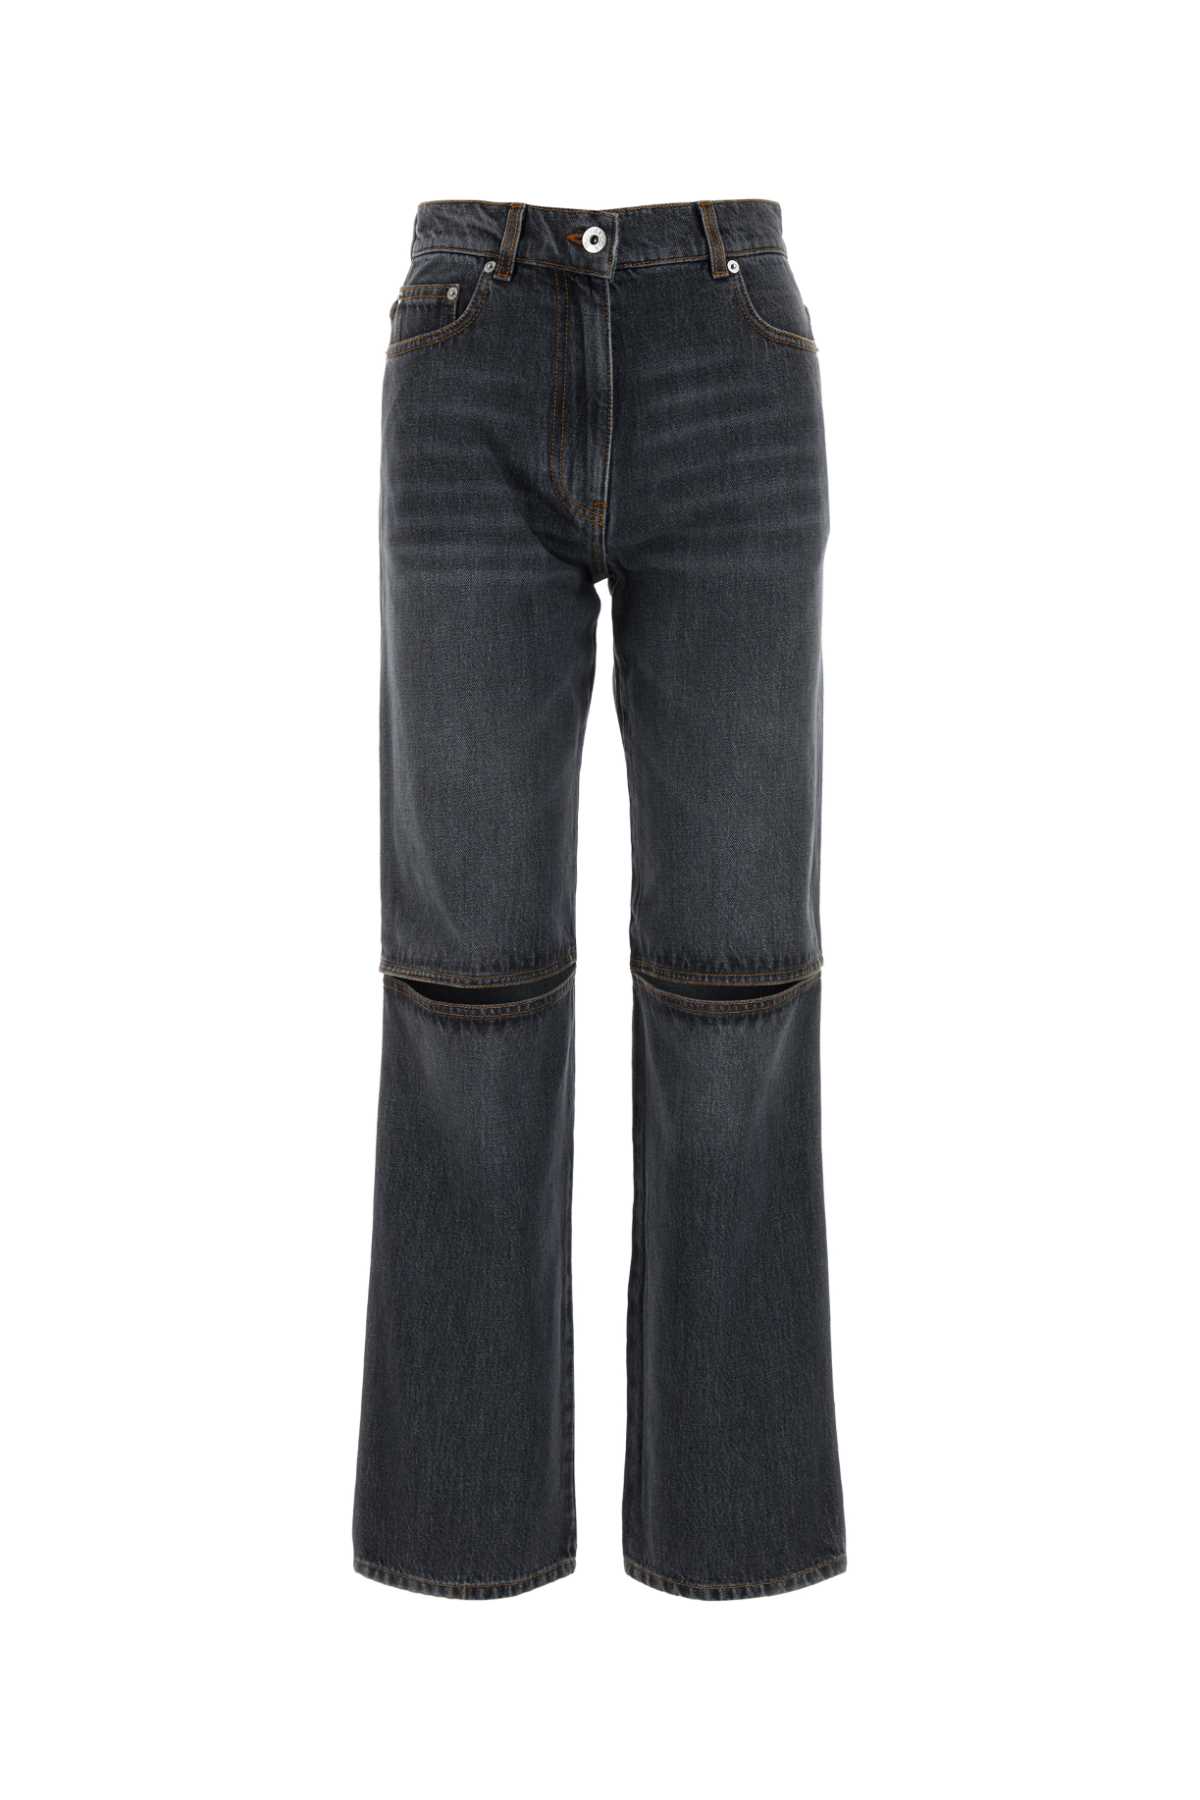 J.W. Anderson Grey Denim Jeans